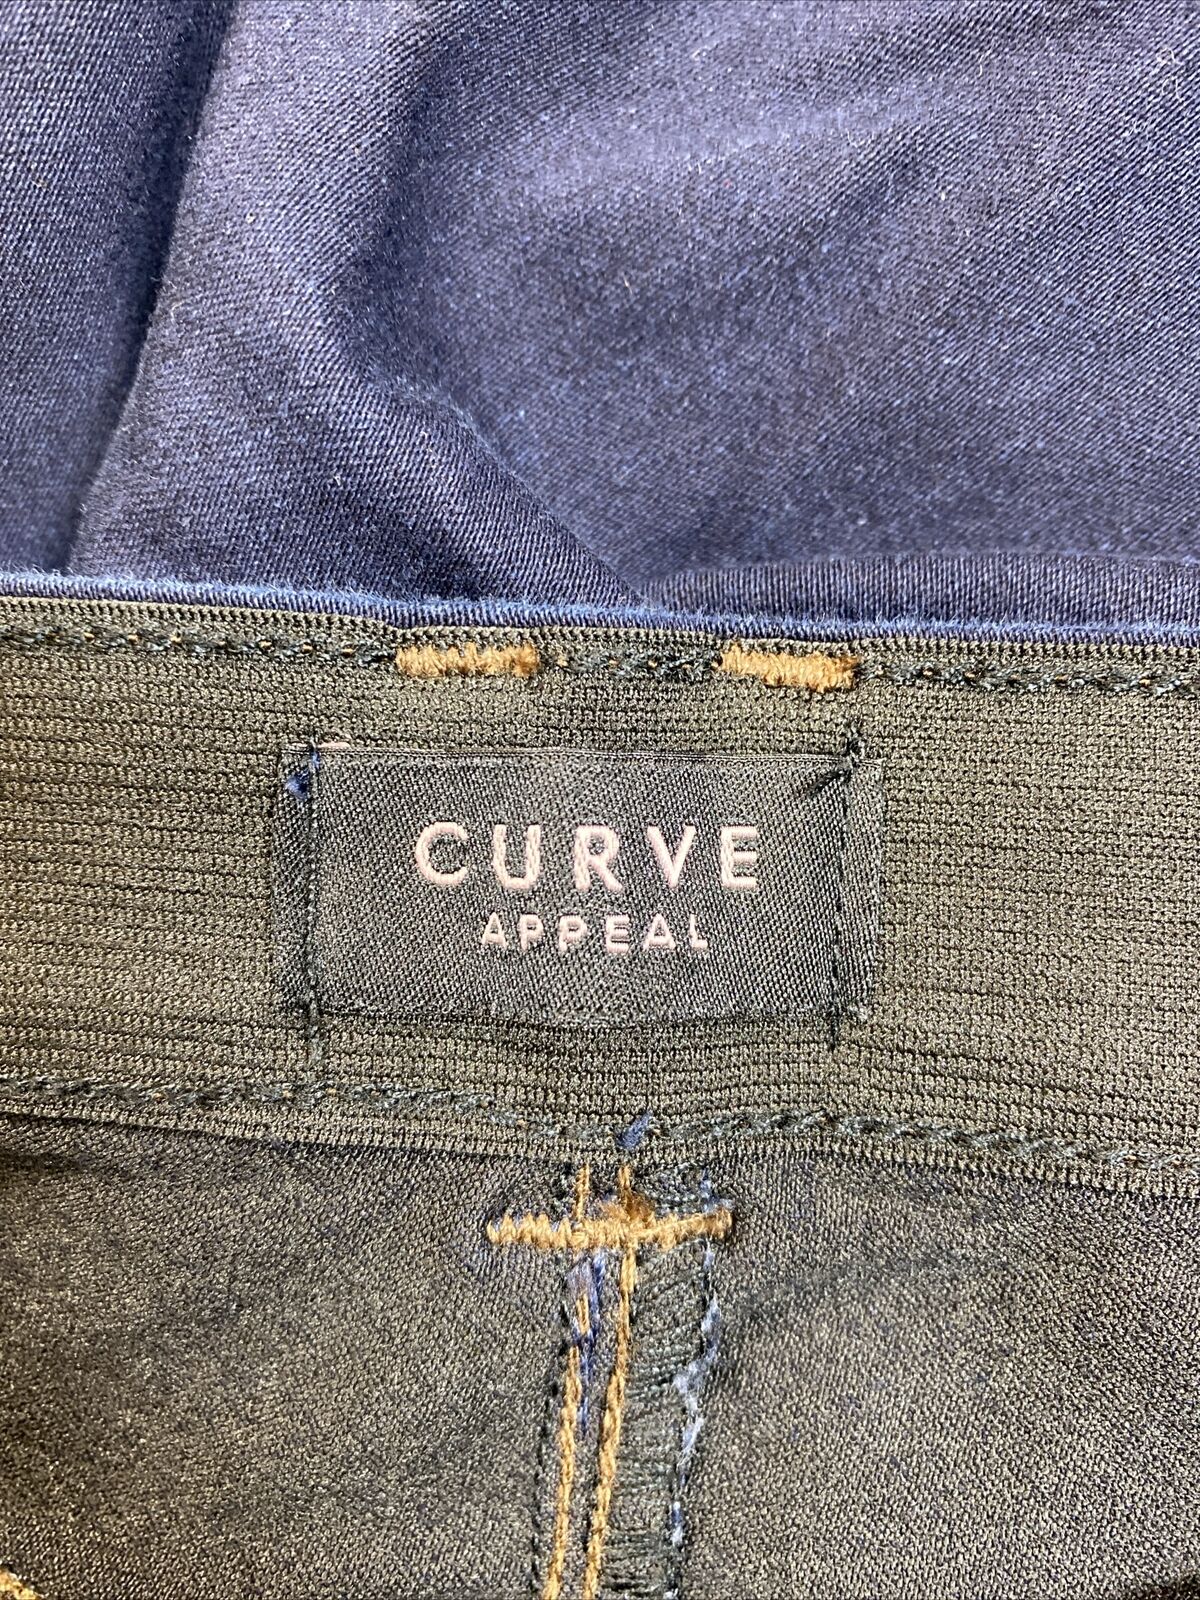 Curve Appeal Women's Dark Wash Stretch Skinny Jeans - 8/29